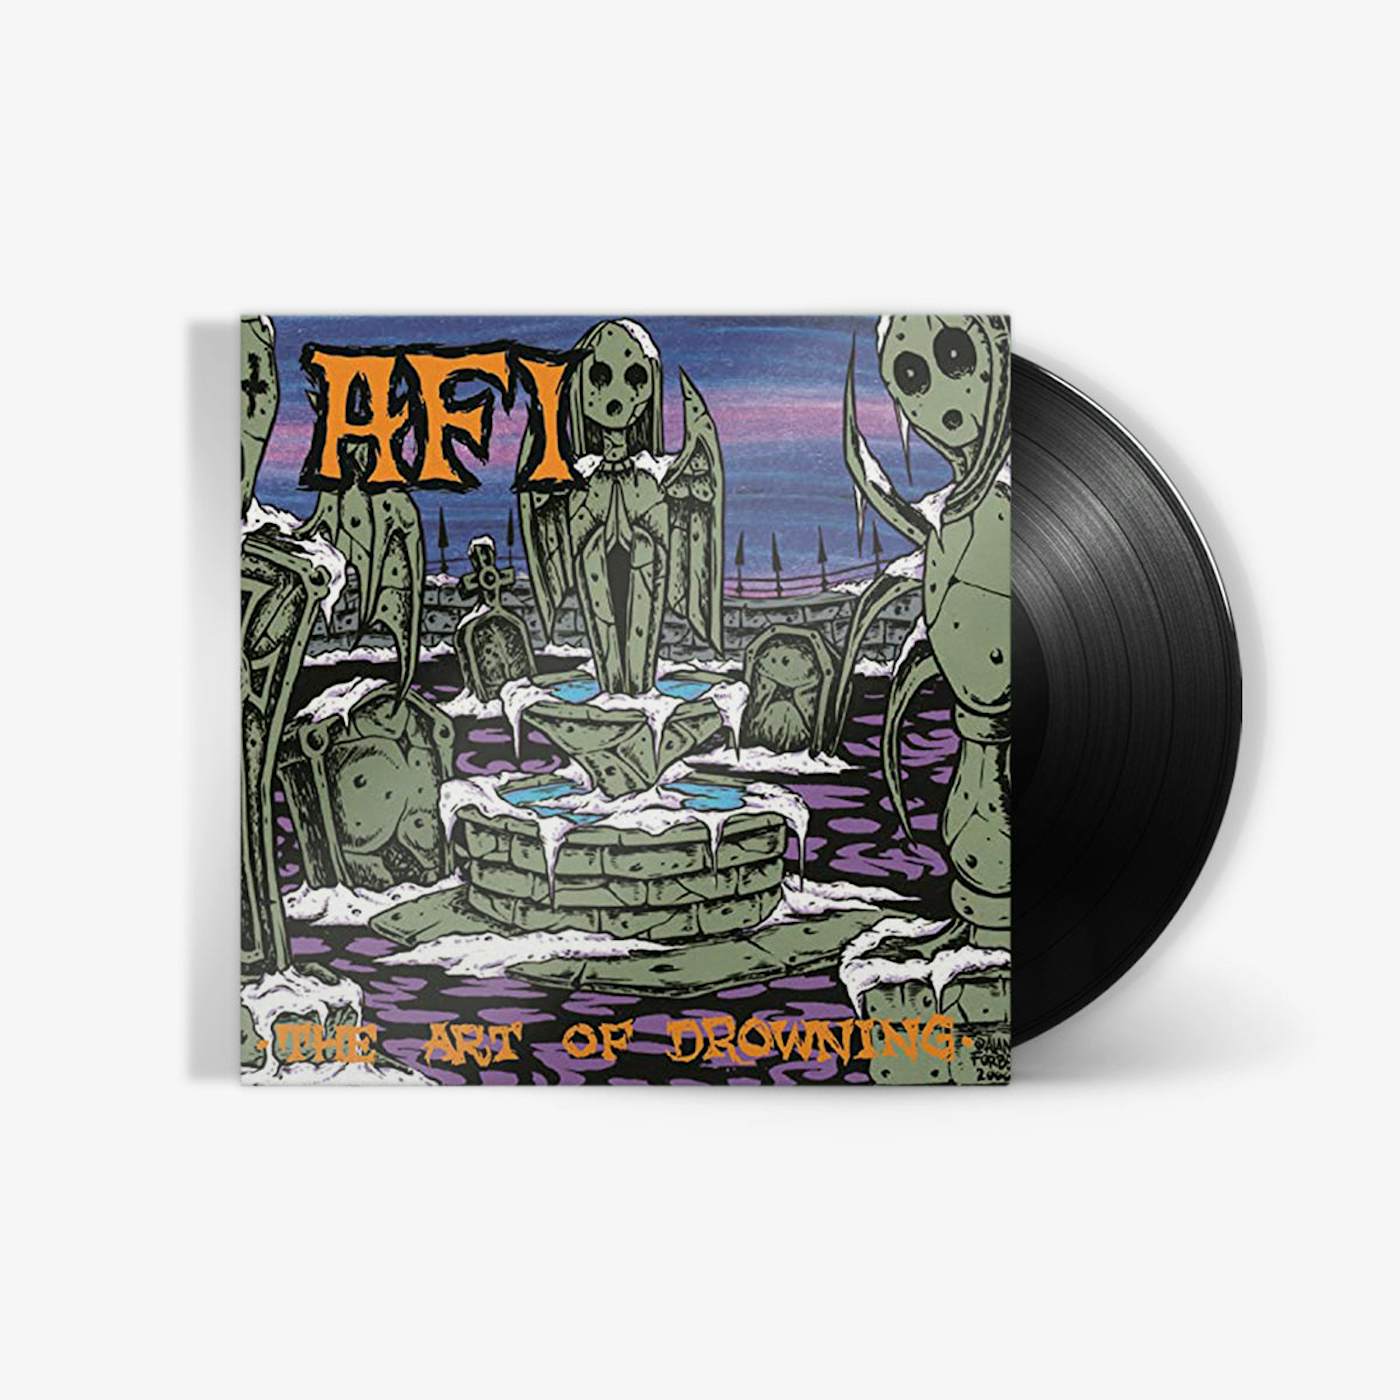 AFI The Art of Drowning (LP) (Vinyl)